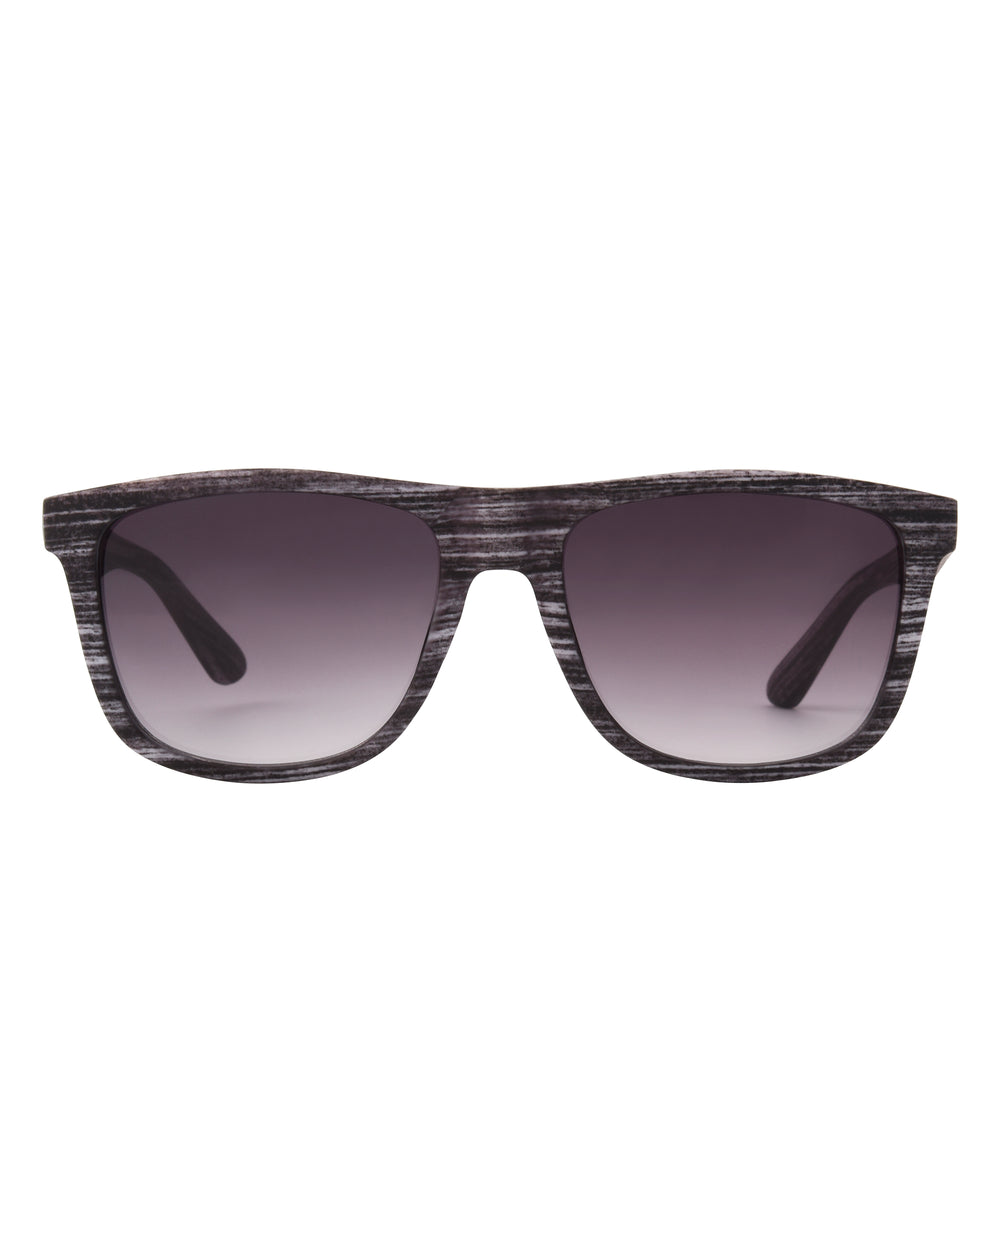 Body Glove Men's Jake Sunglasses, Black, 63 mm 